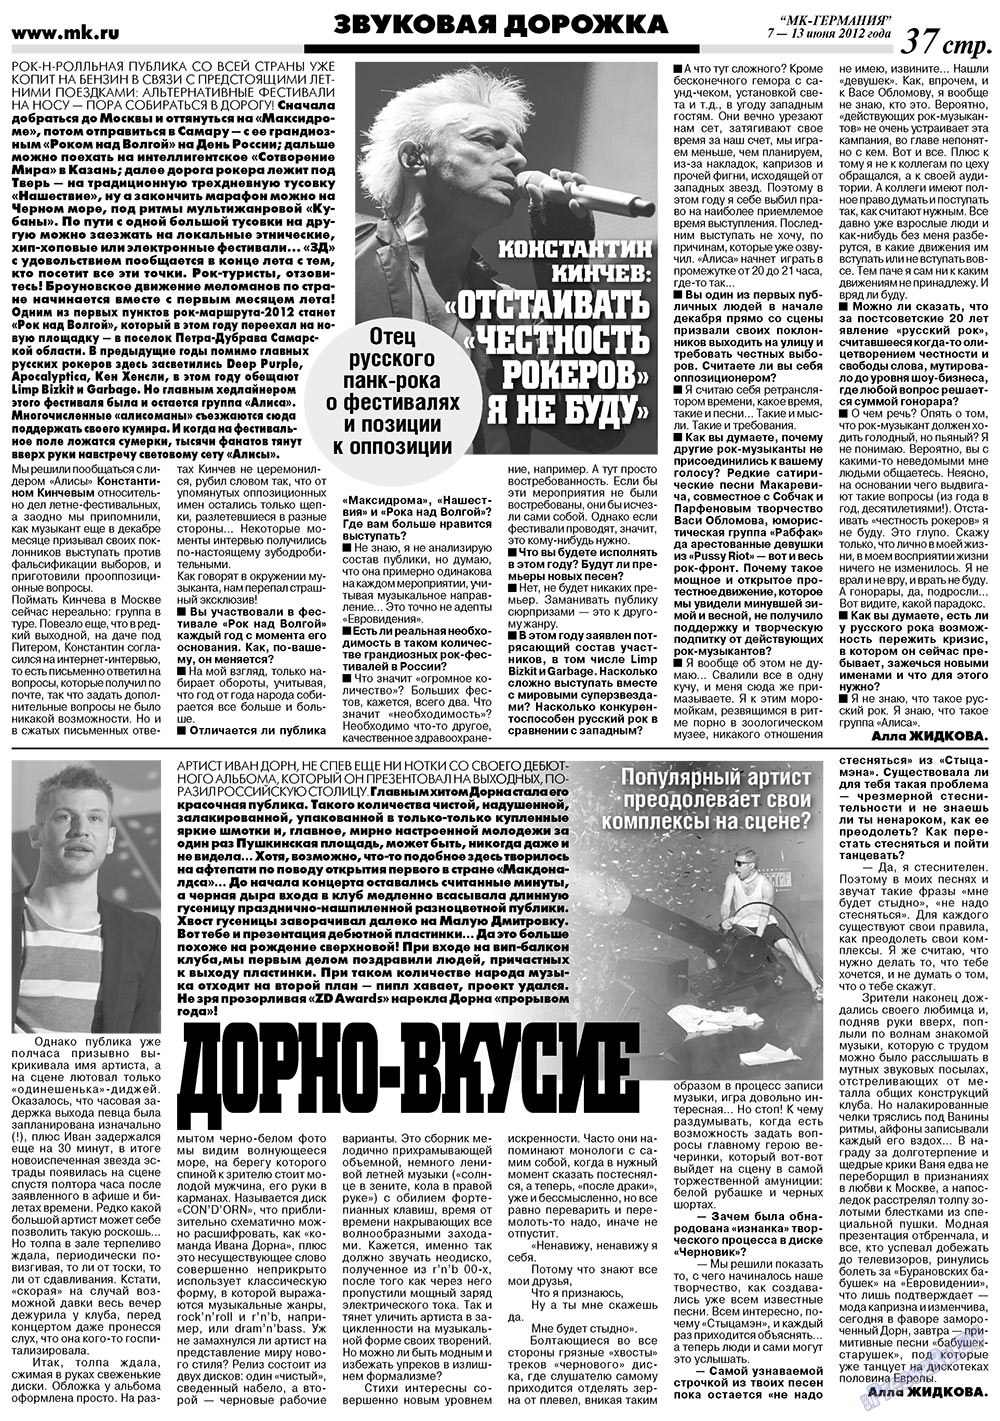 МК-Германия, газета. 2012 №23 стр.37